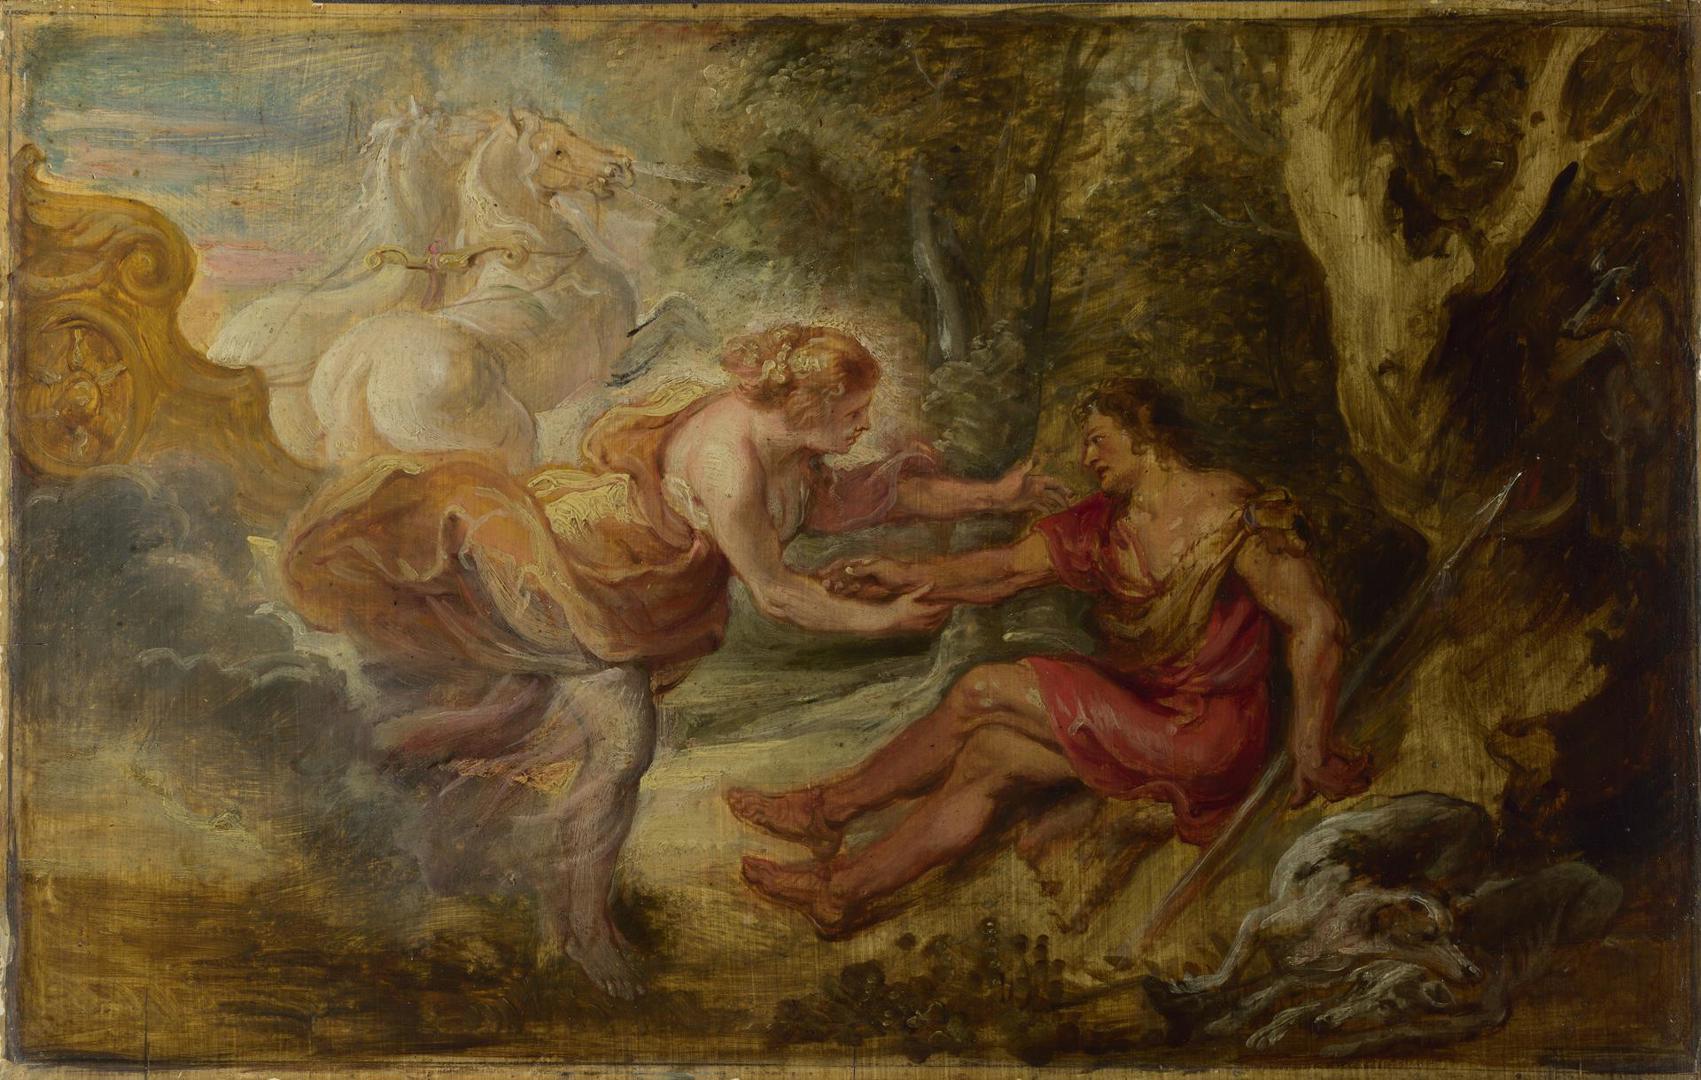 Aurora abducting Cephalus by Peter Paul Rubens